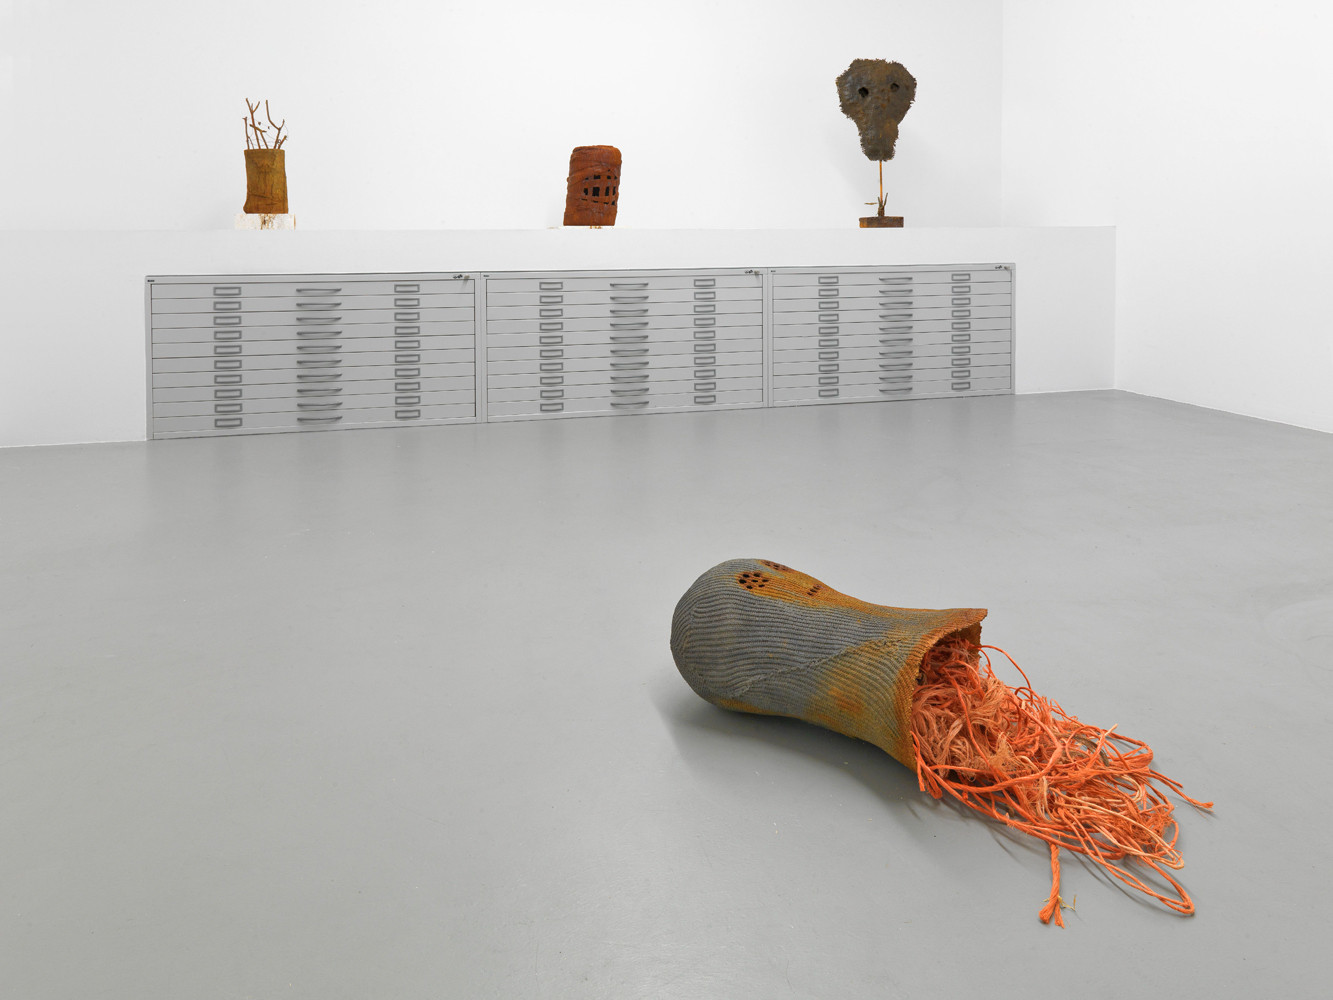 Des Hughes, ‘Rust never sleeps’, Installationsansicht, 2013